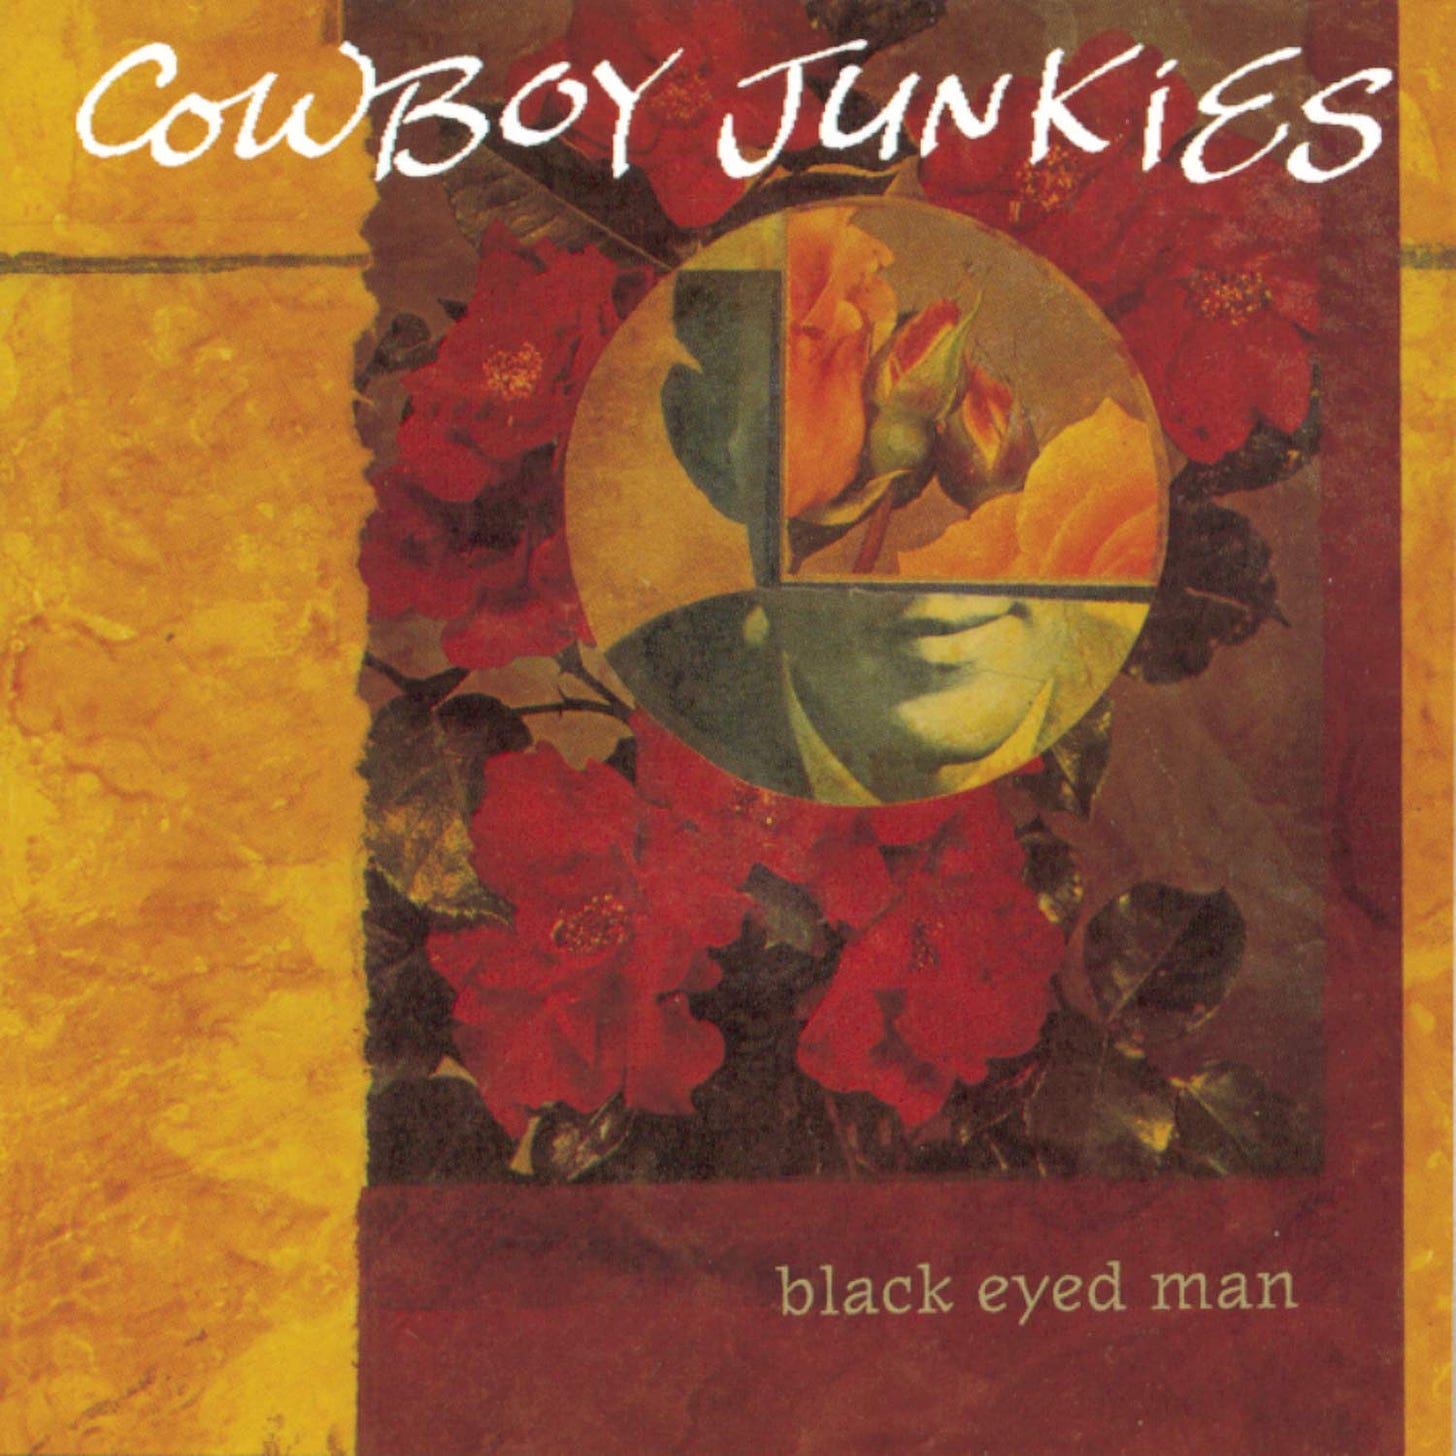 Cowboy Junkies - Black Eyed Man - Amazon.com Music